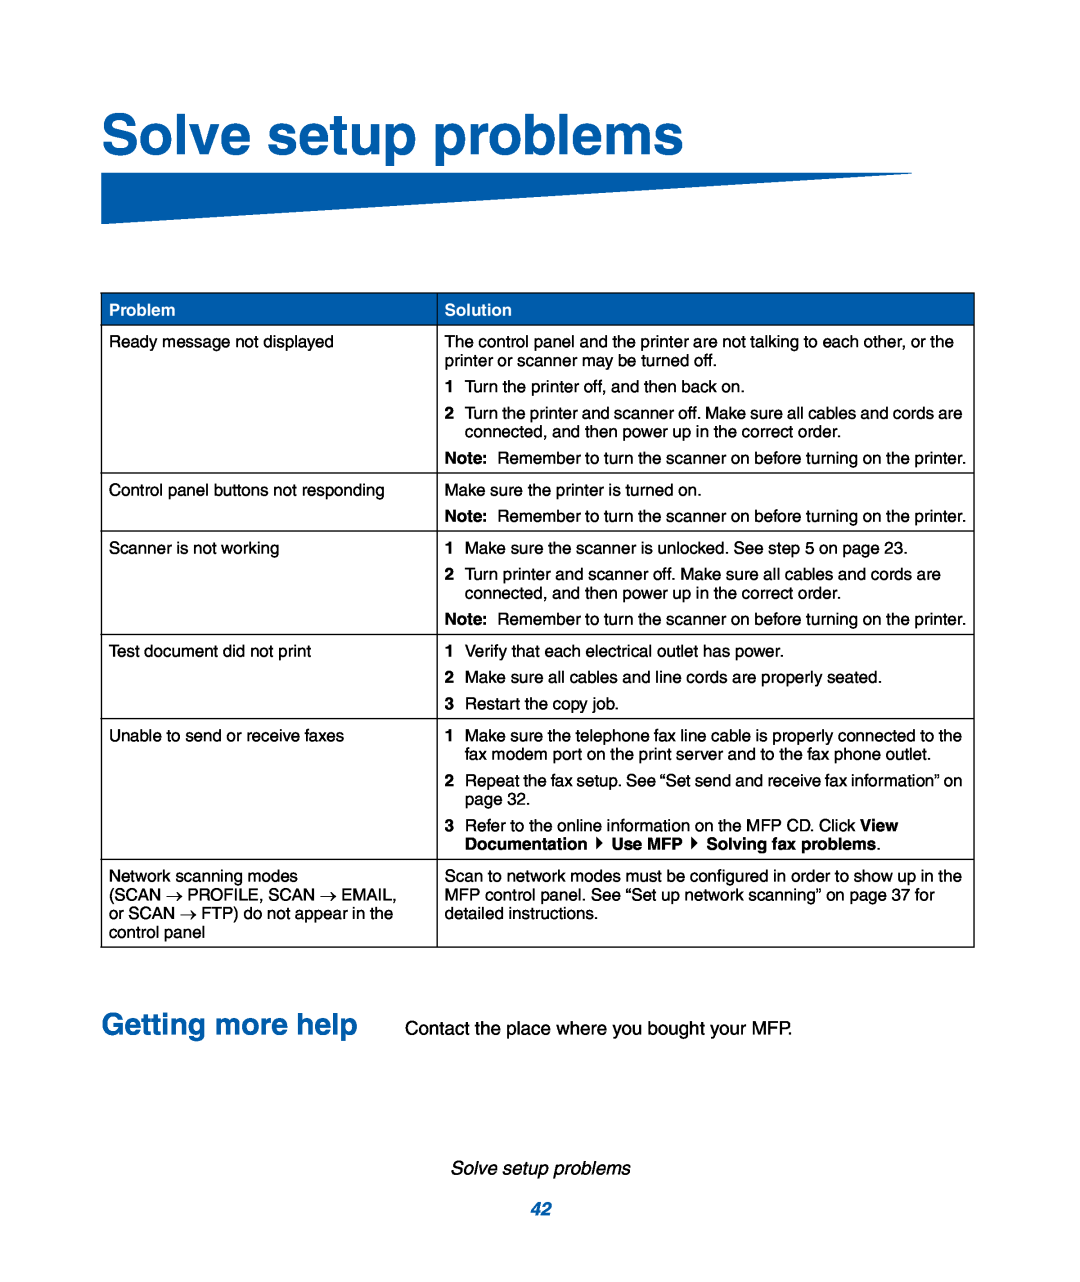 IBM M22 MFP manual Solve setup problems, Problem, Solution, Documentation Use MFP Solving fax problems 